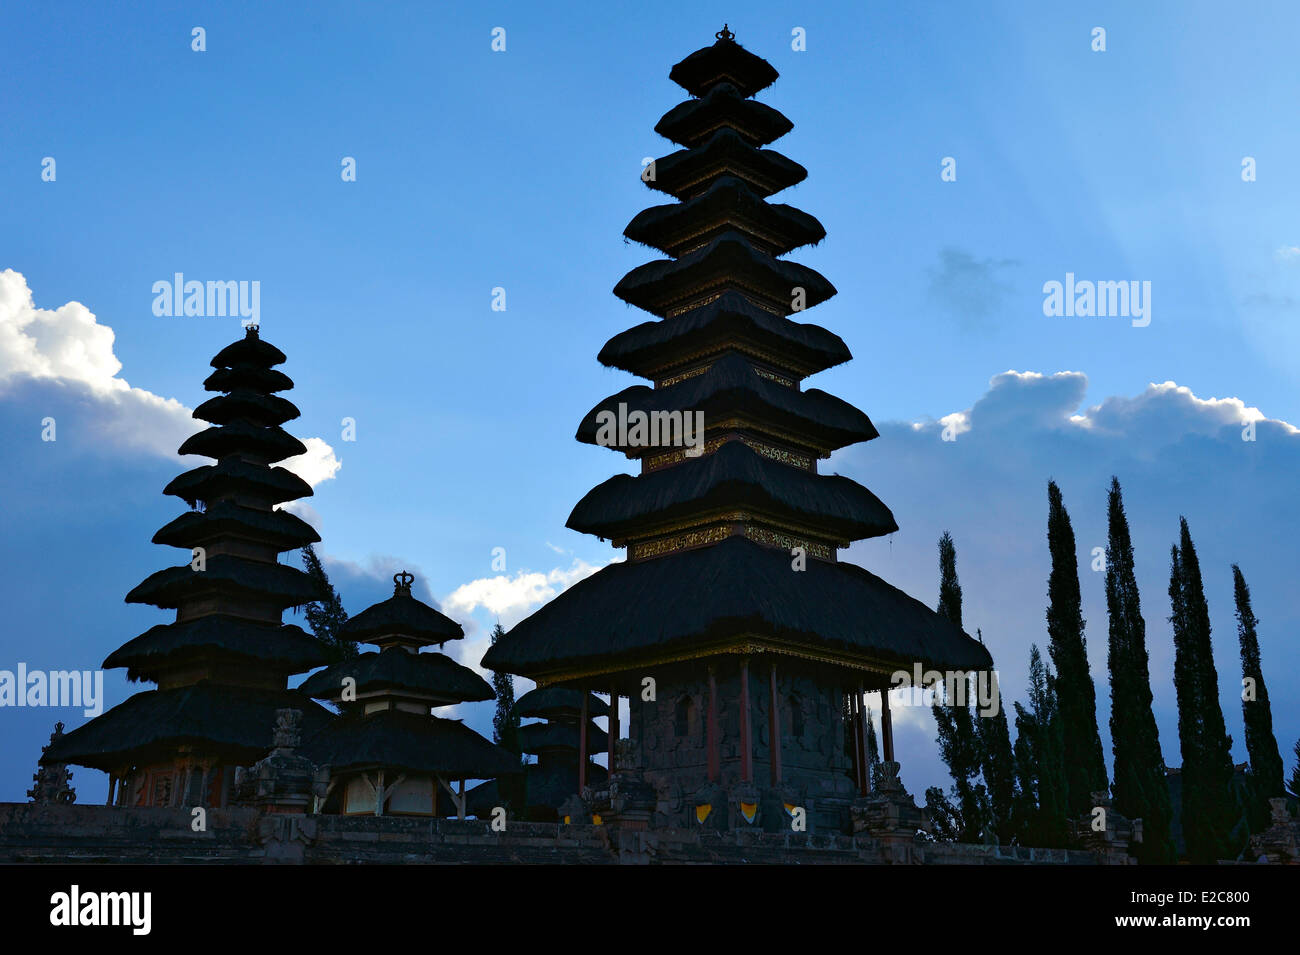 Indonesien, Bali, Kintamani, der Tempel Pura Ulun Danu Batur entlang den Kraterrand der Caldera Gunung Batur Stockfoto